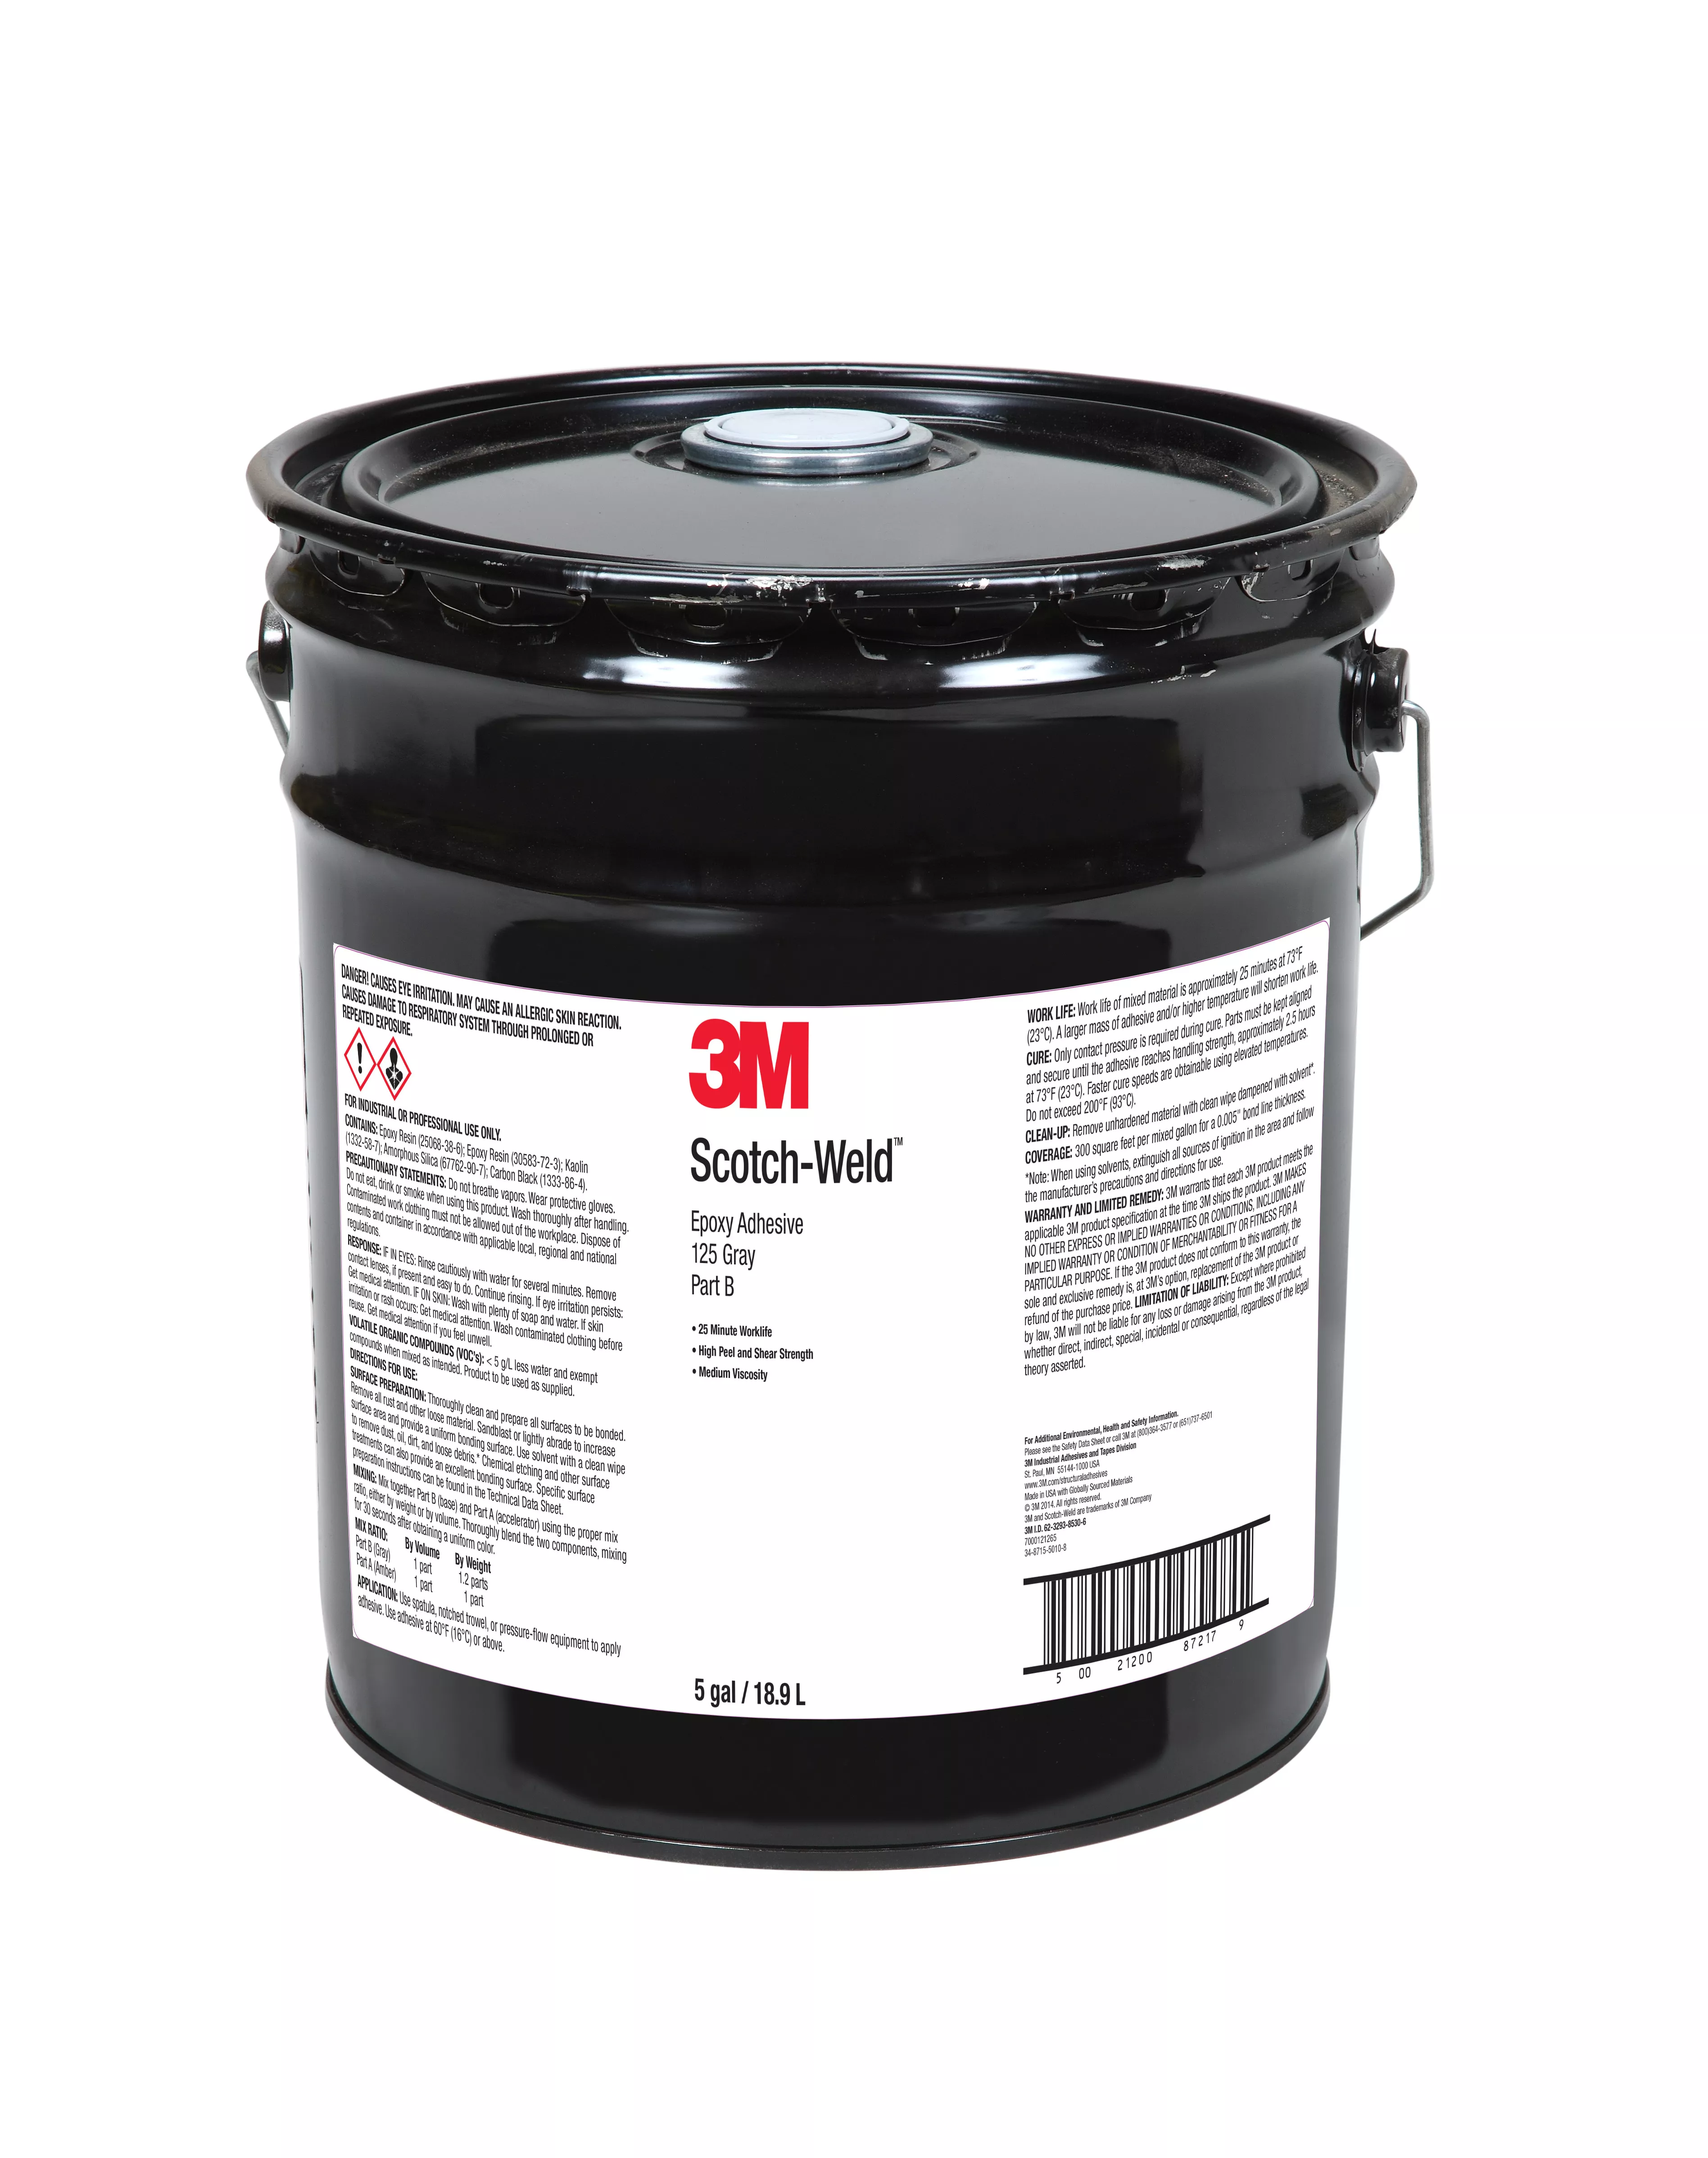 3M™ Scotch-Weld™ Epoxy Adhesive 125, Gray, Part B, 5 Gallon (Pail), Drum